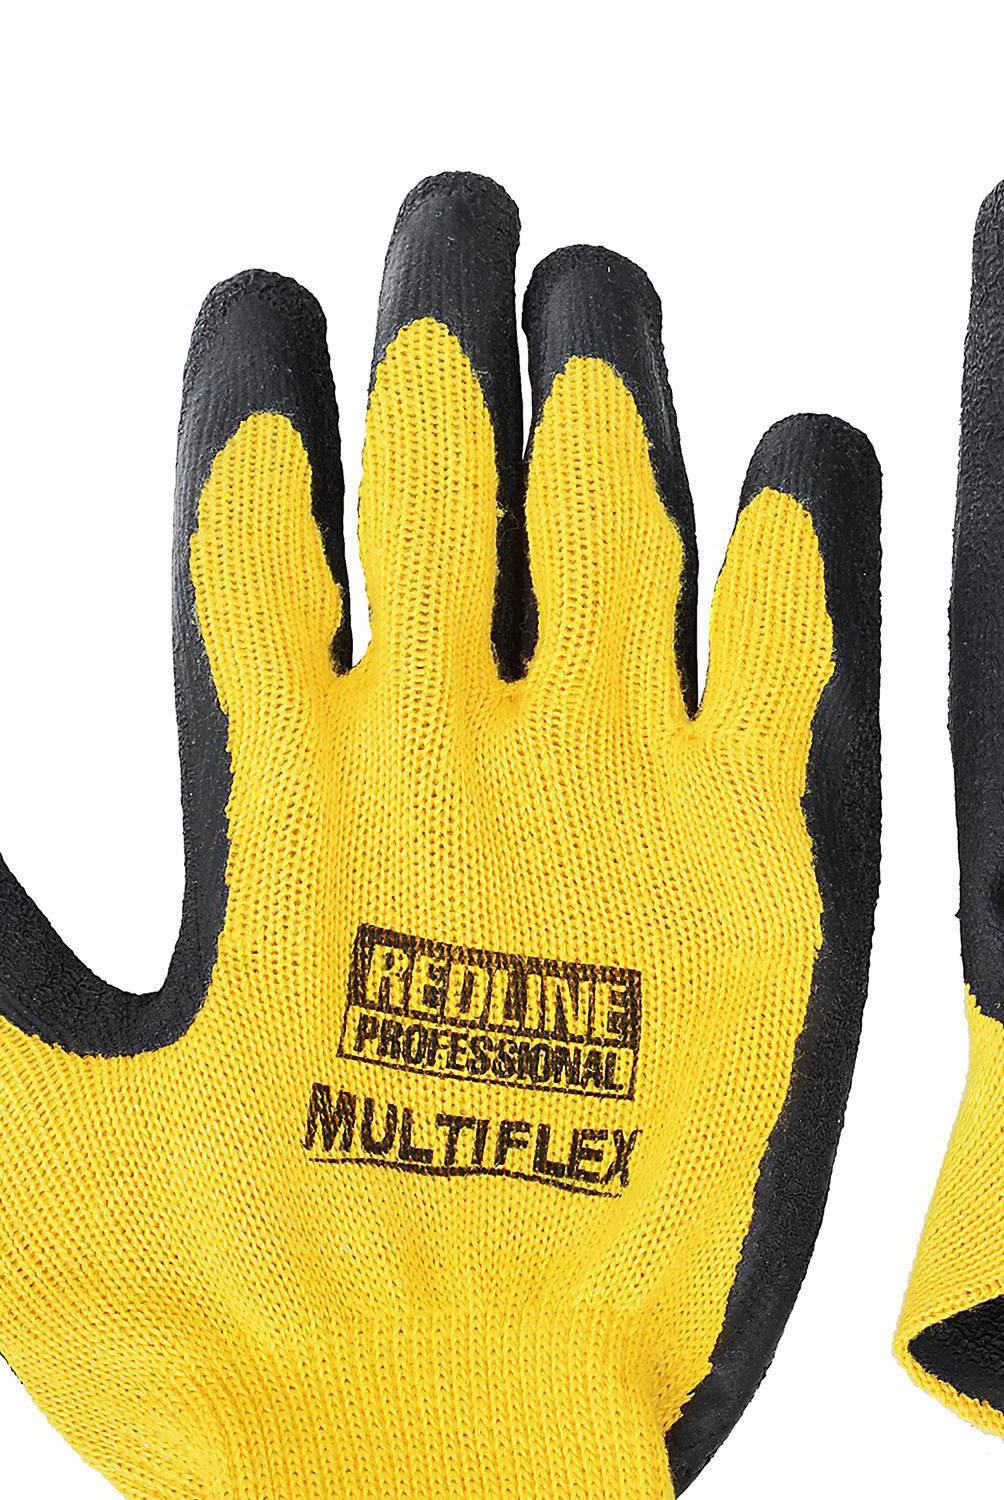 REDLINE - Pack 6 pares guantes multiflex amarillo negro palma látex